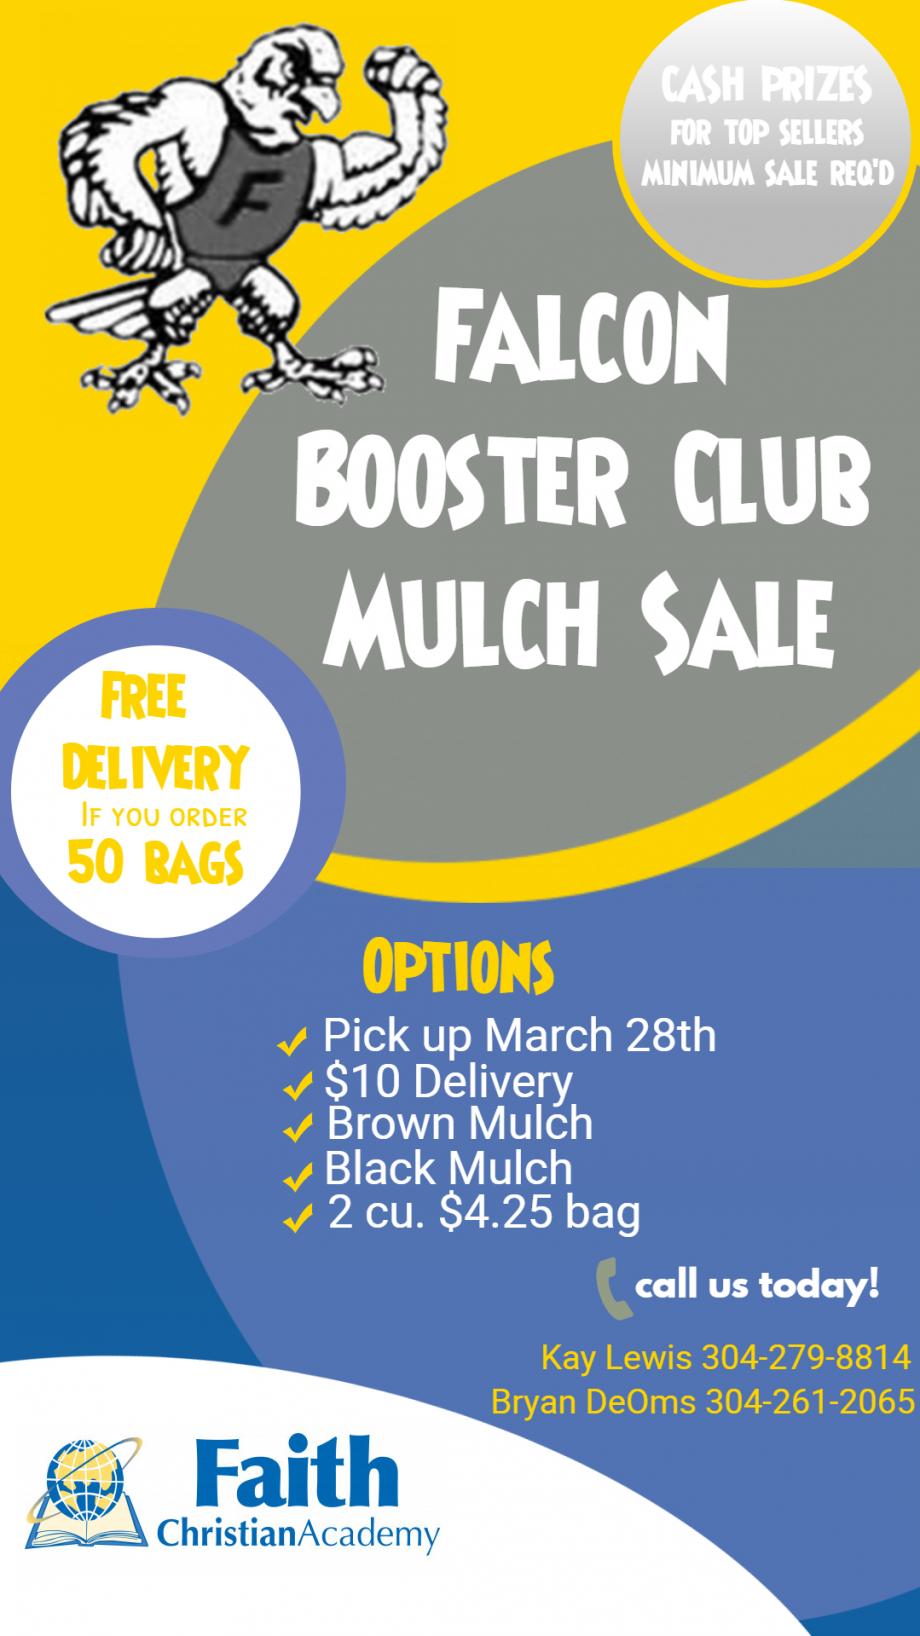 Falcon Booster Club Mulch Sale Flyer